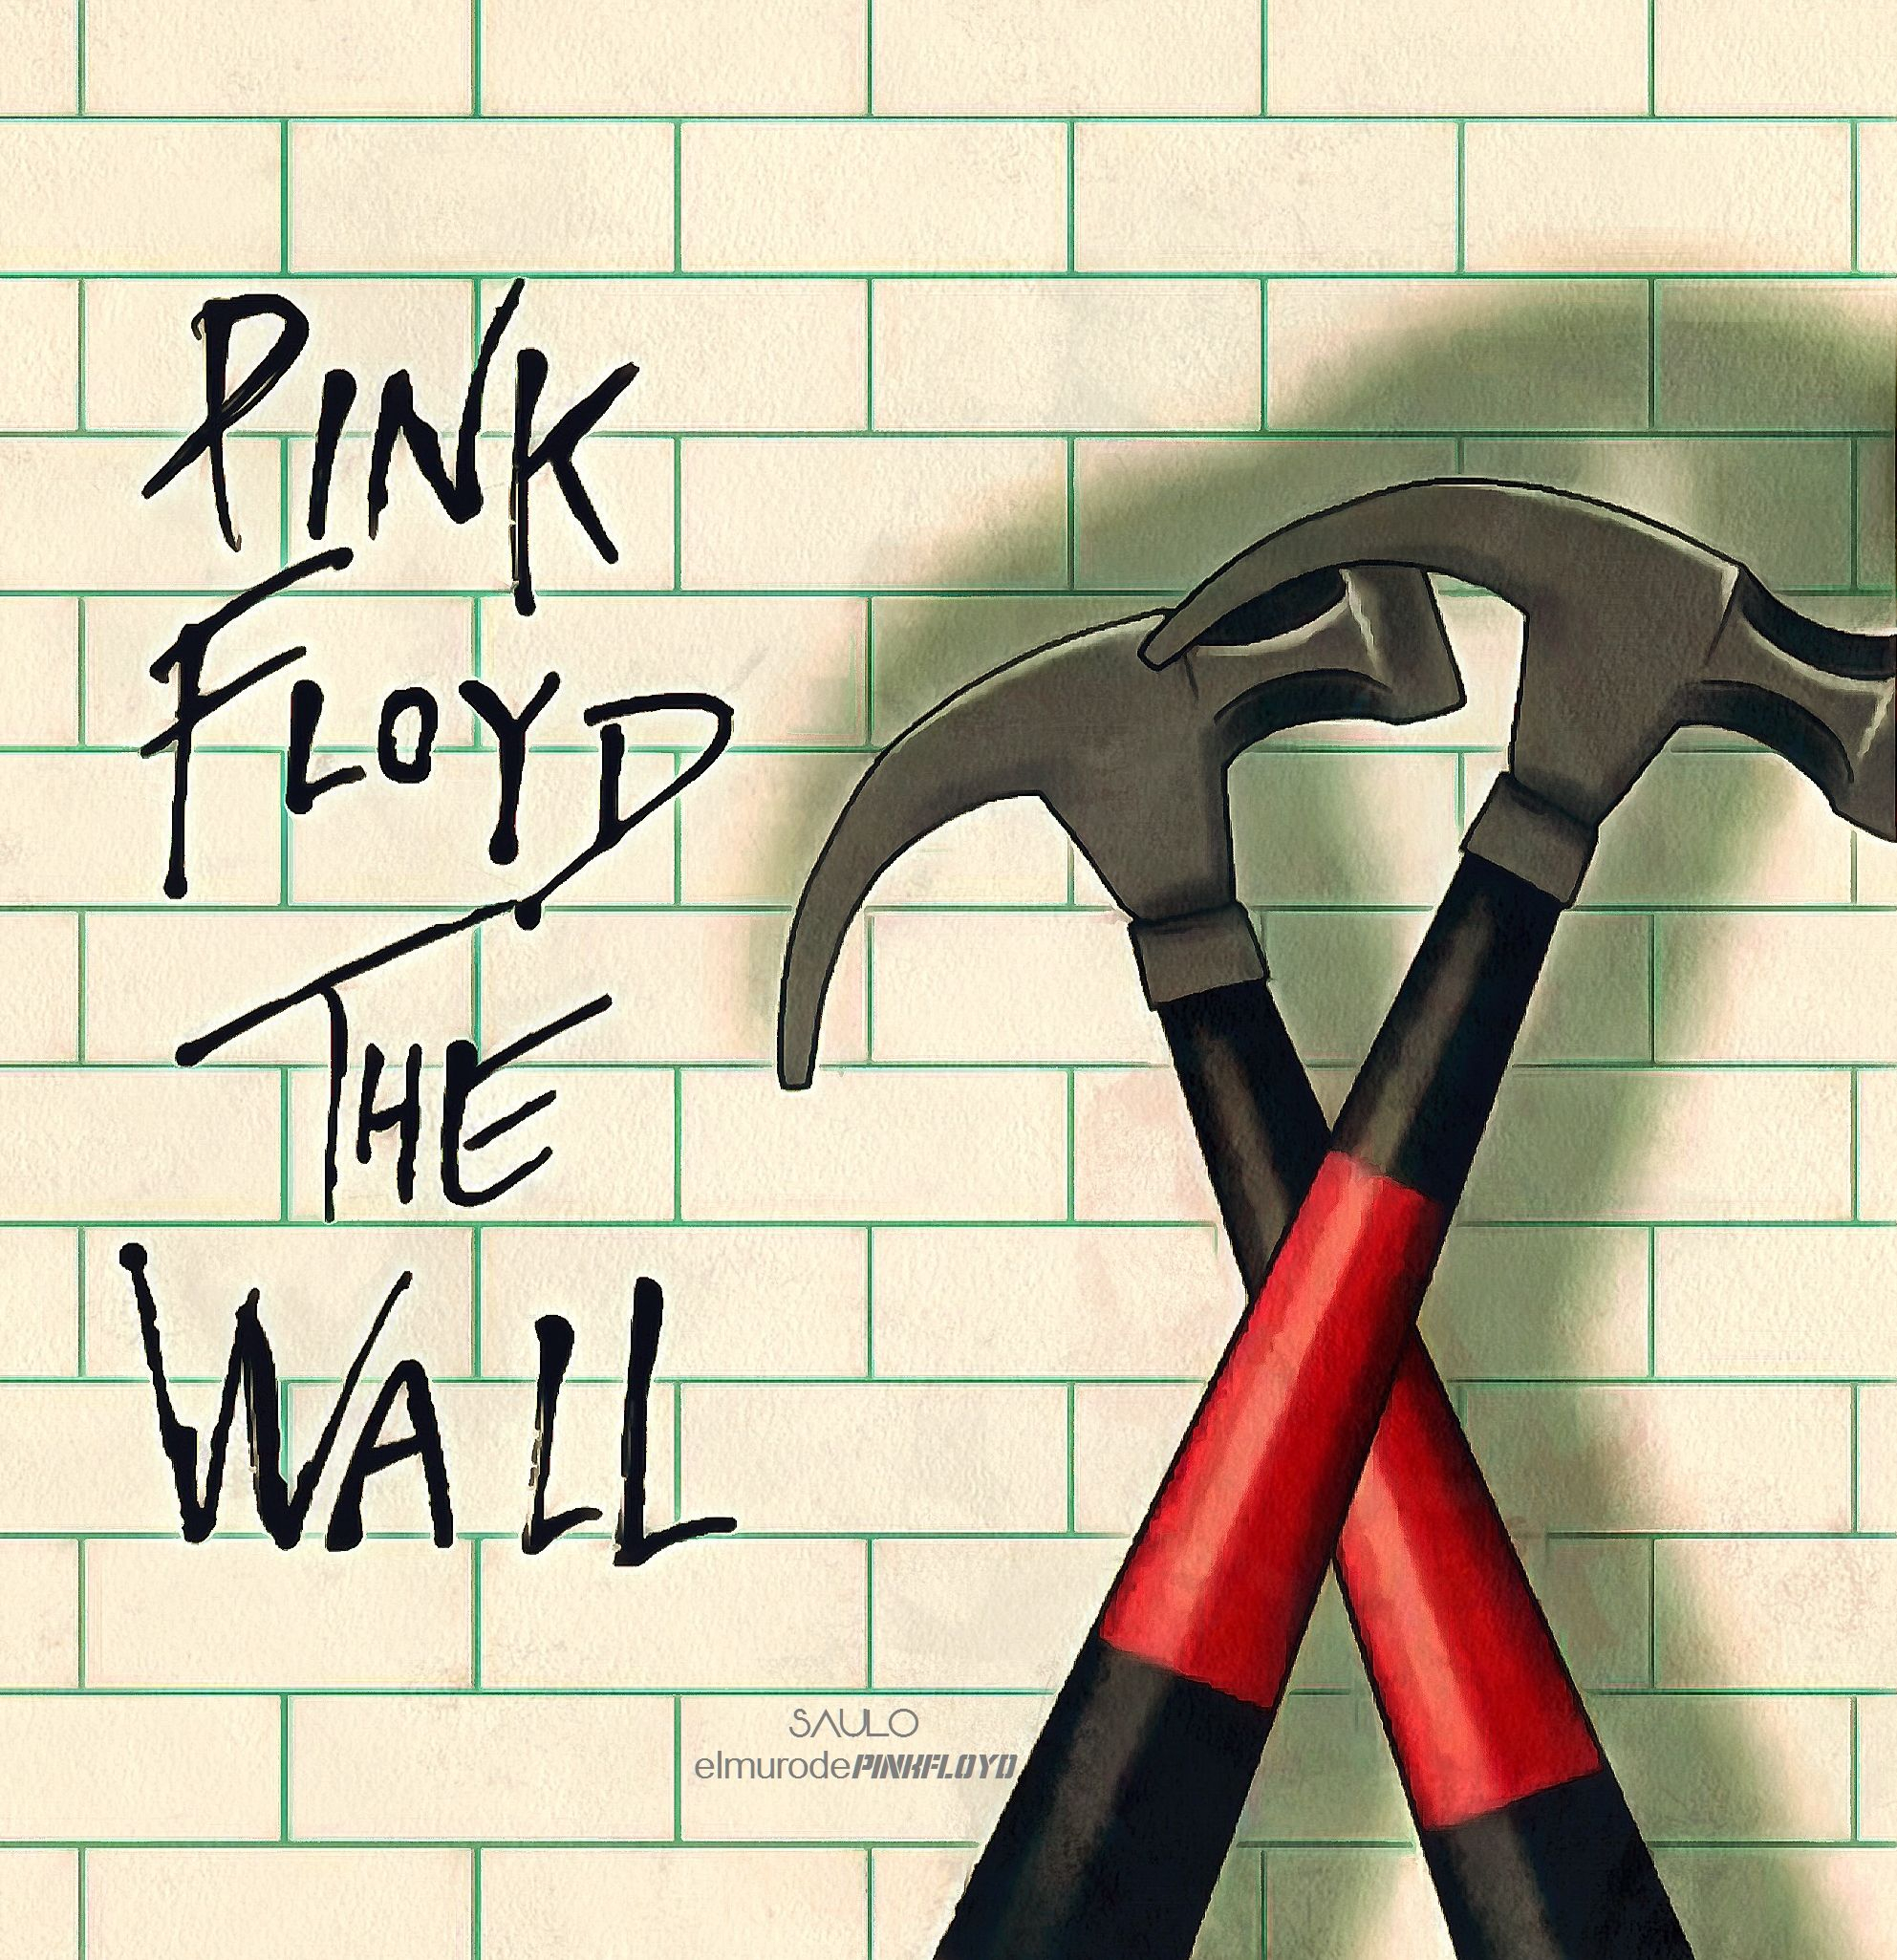 1985x2051 Pink Floyd The Wall El Muro De Pink Floyd | Pink floyd art, Pink floyd, Pink floyd poster